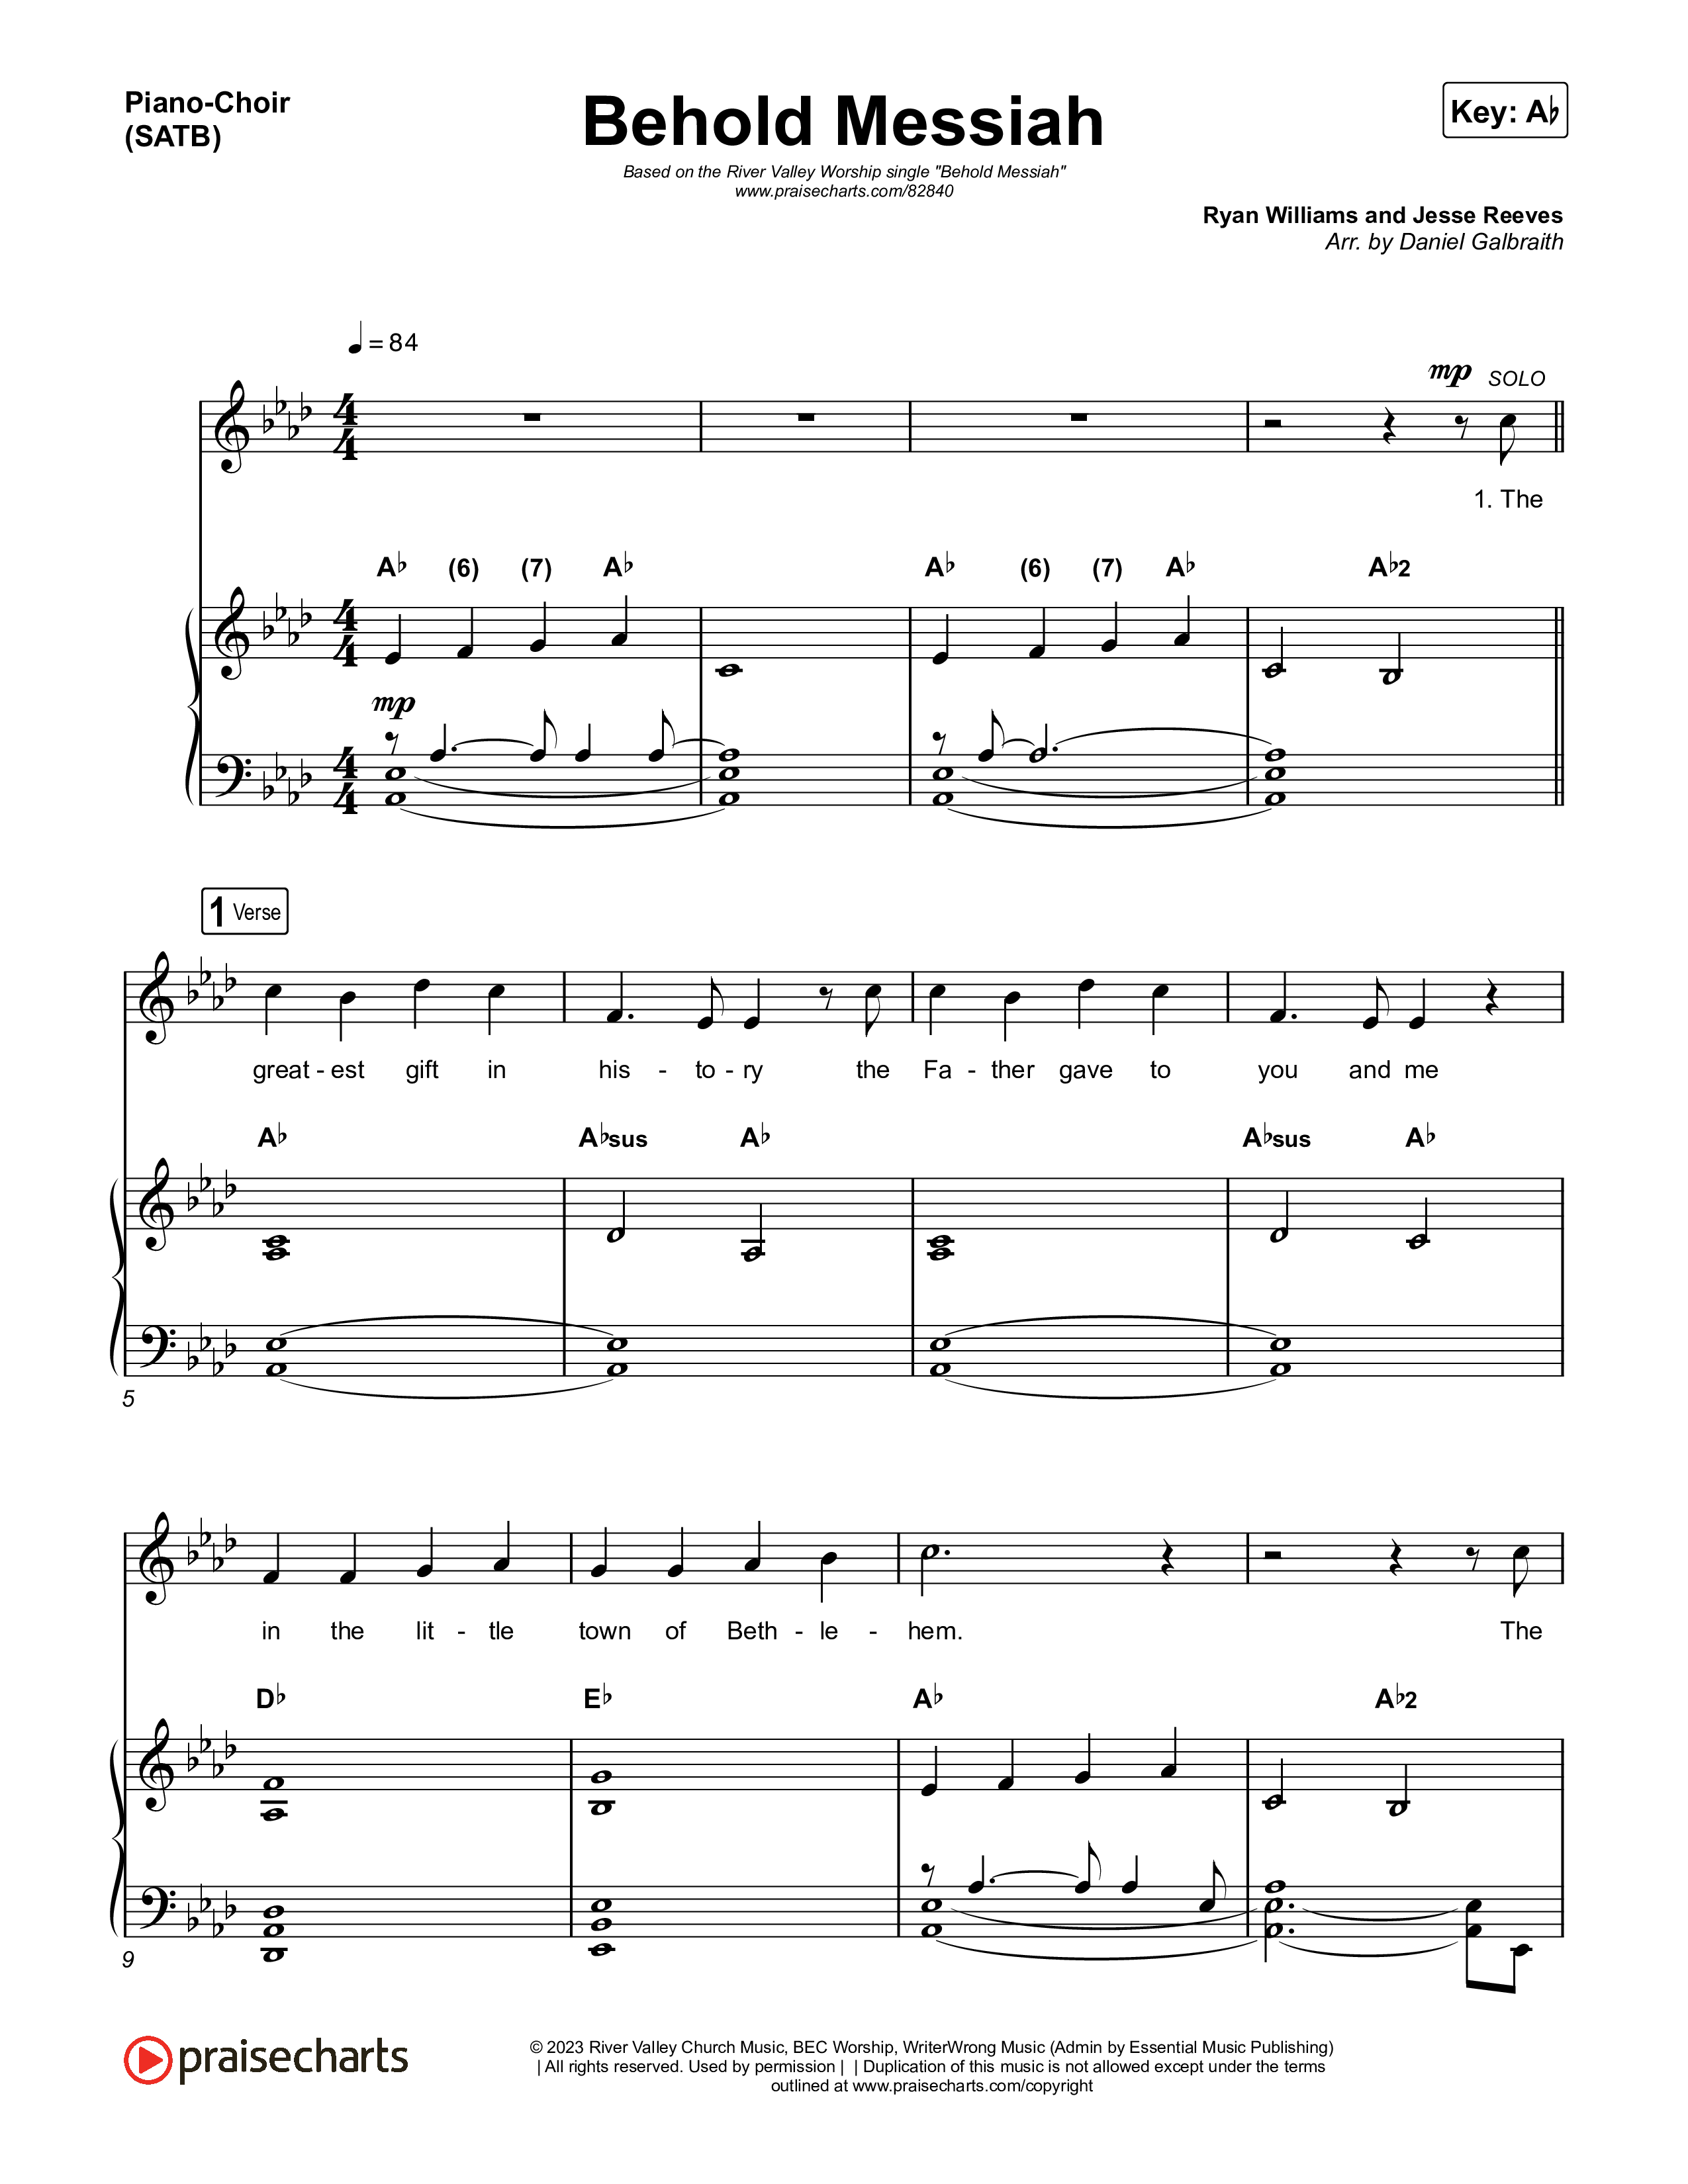 Behold Messiah Piano/Vocal (SATB) (River Valley Worship)